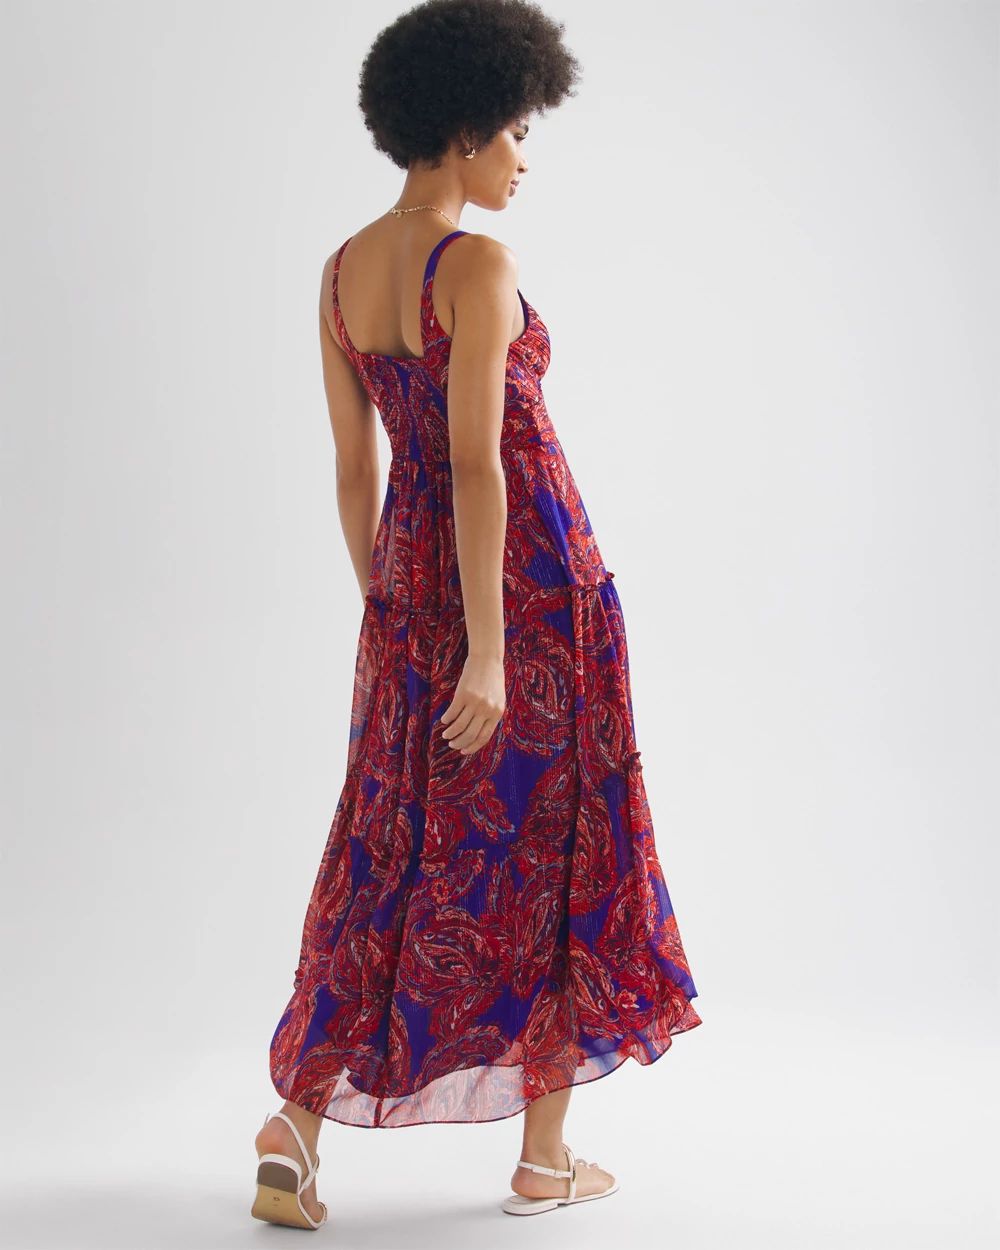 Paisley Midi Dress click to view larger image.